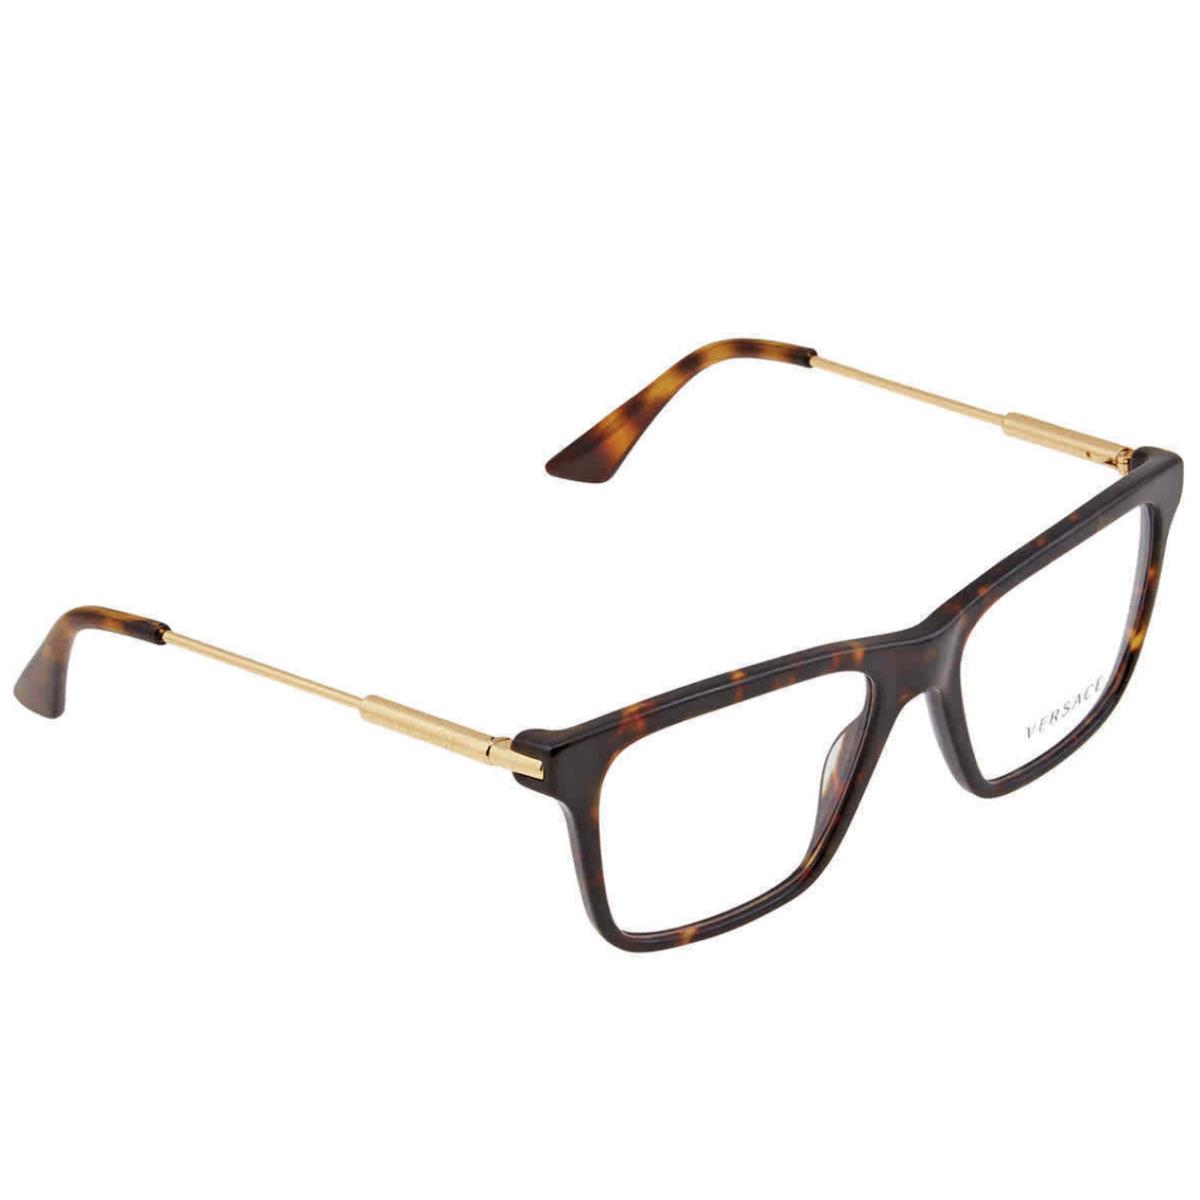 Versace Reading Glasses Mod. 3308 108 53-17 145 Tortoise Gold Frames Readers